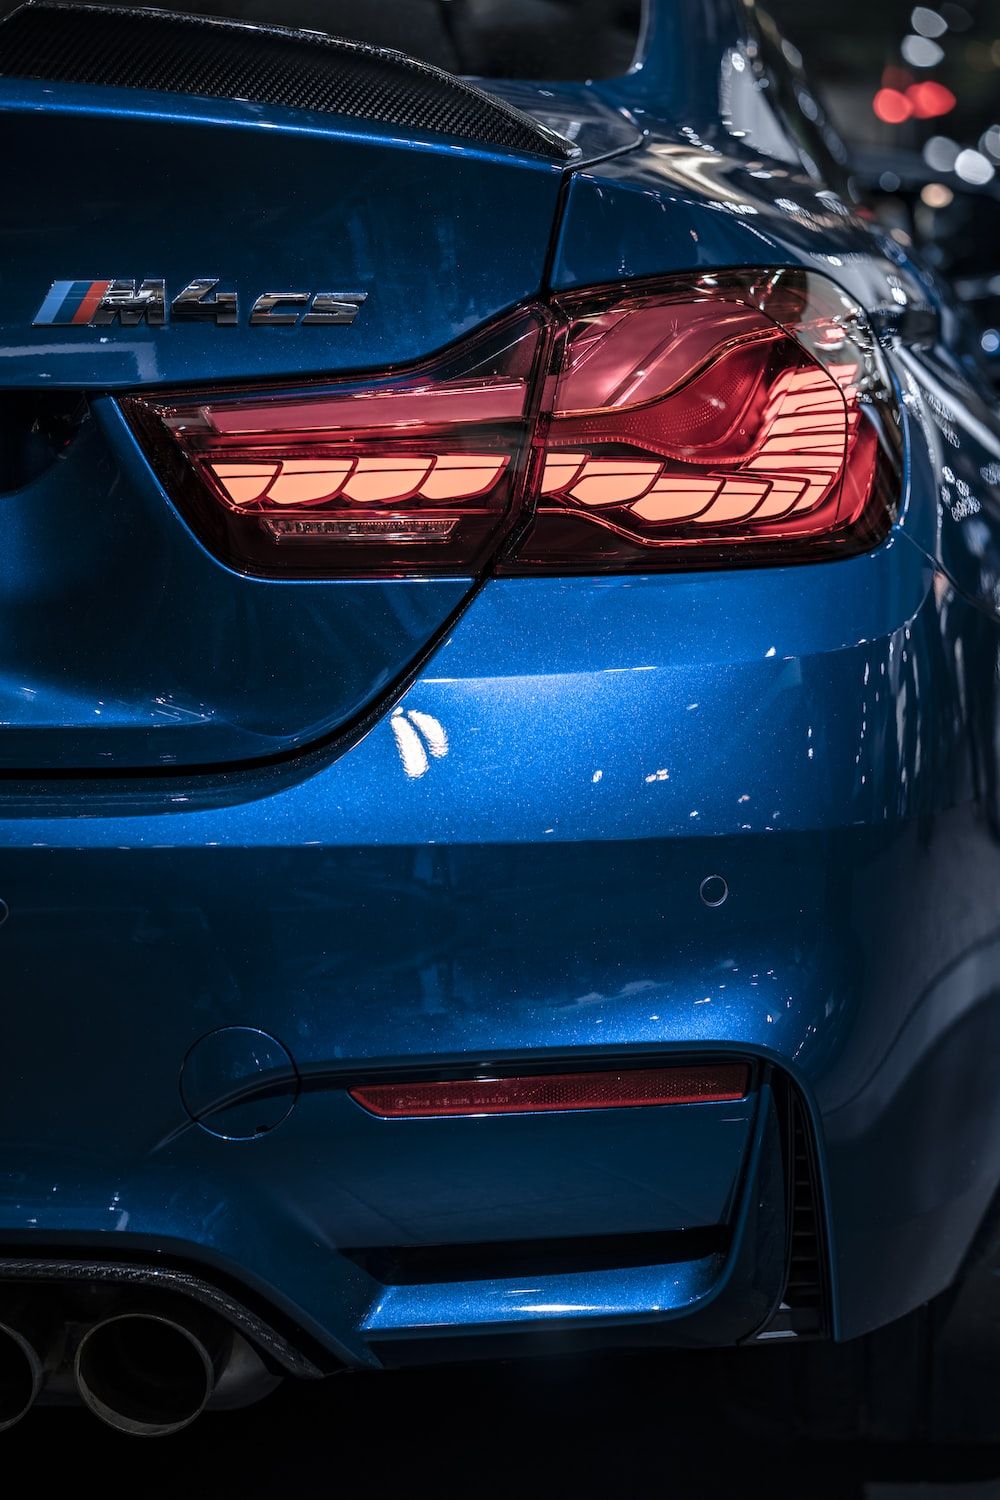 The rear lights of a blue car - BMW